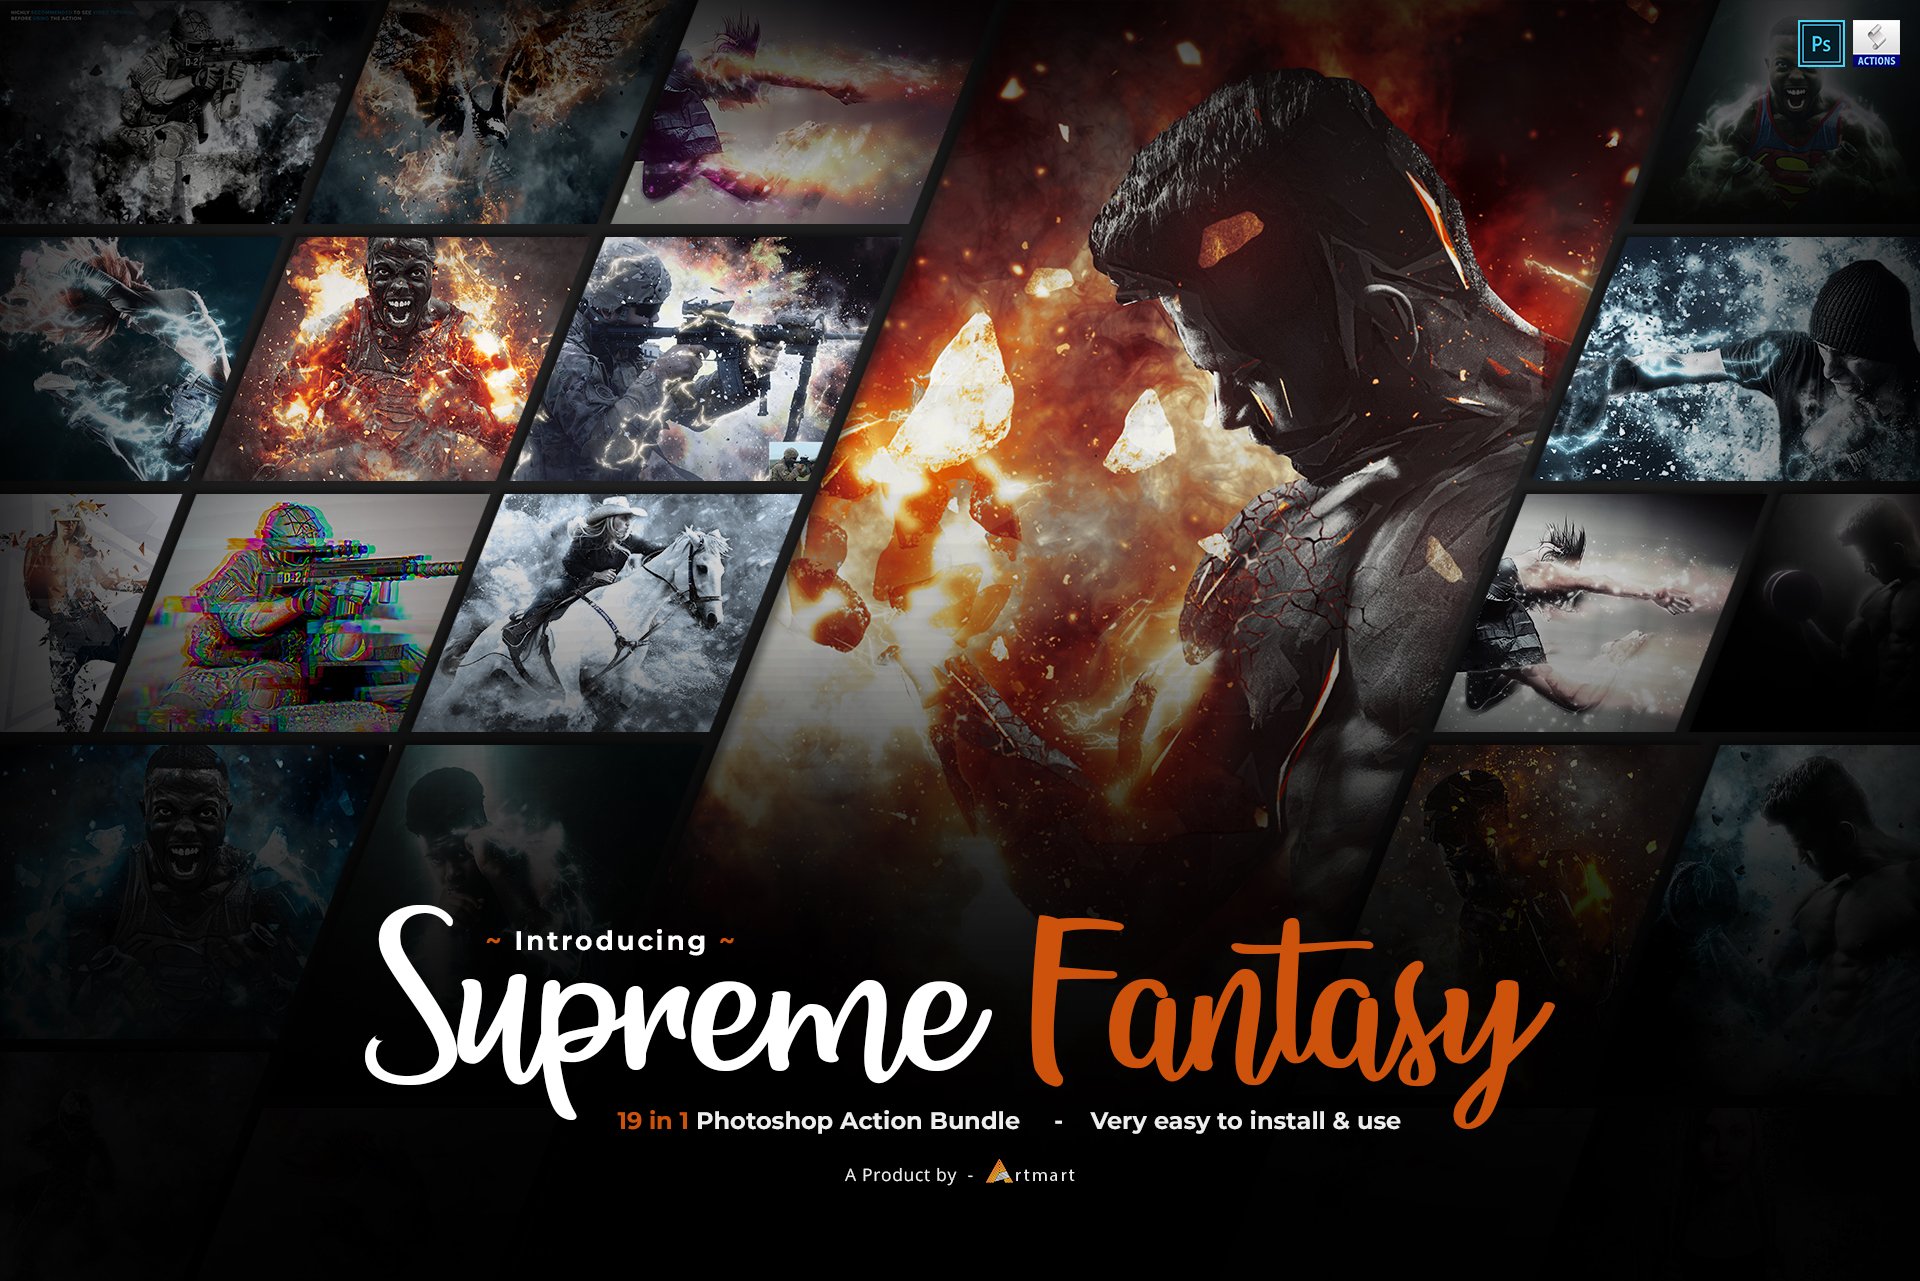 19-in-1 Supreme Fantasy Bundlecover image.